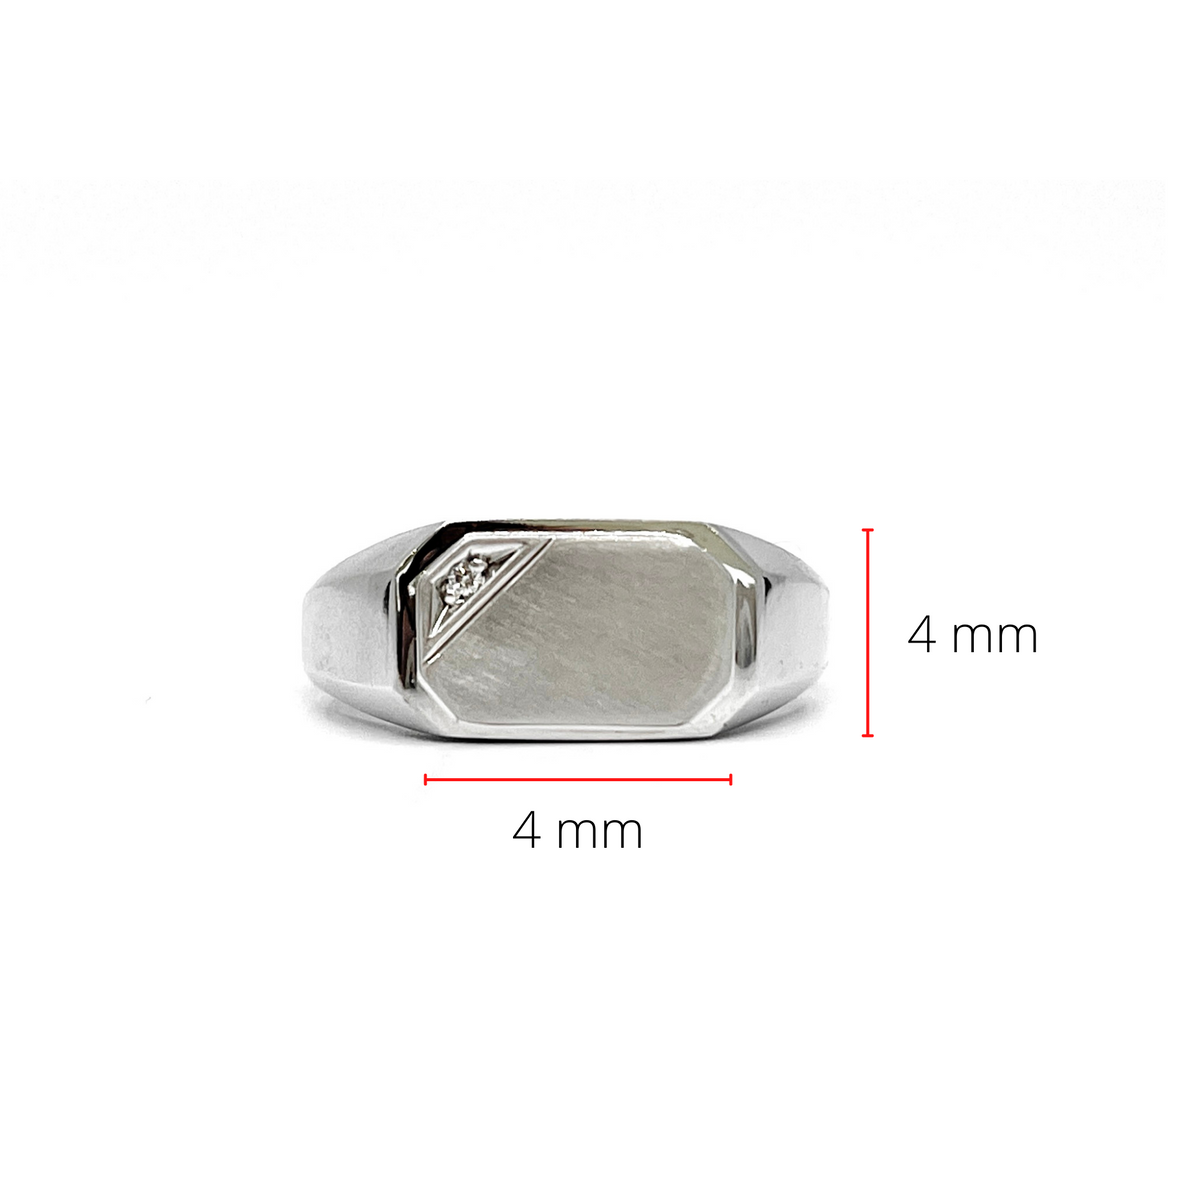 10K White Gold 0.007cttw Diamond Signet Ring- Size 10